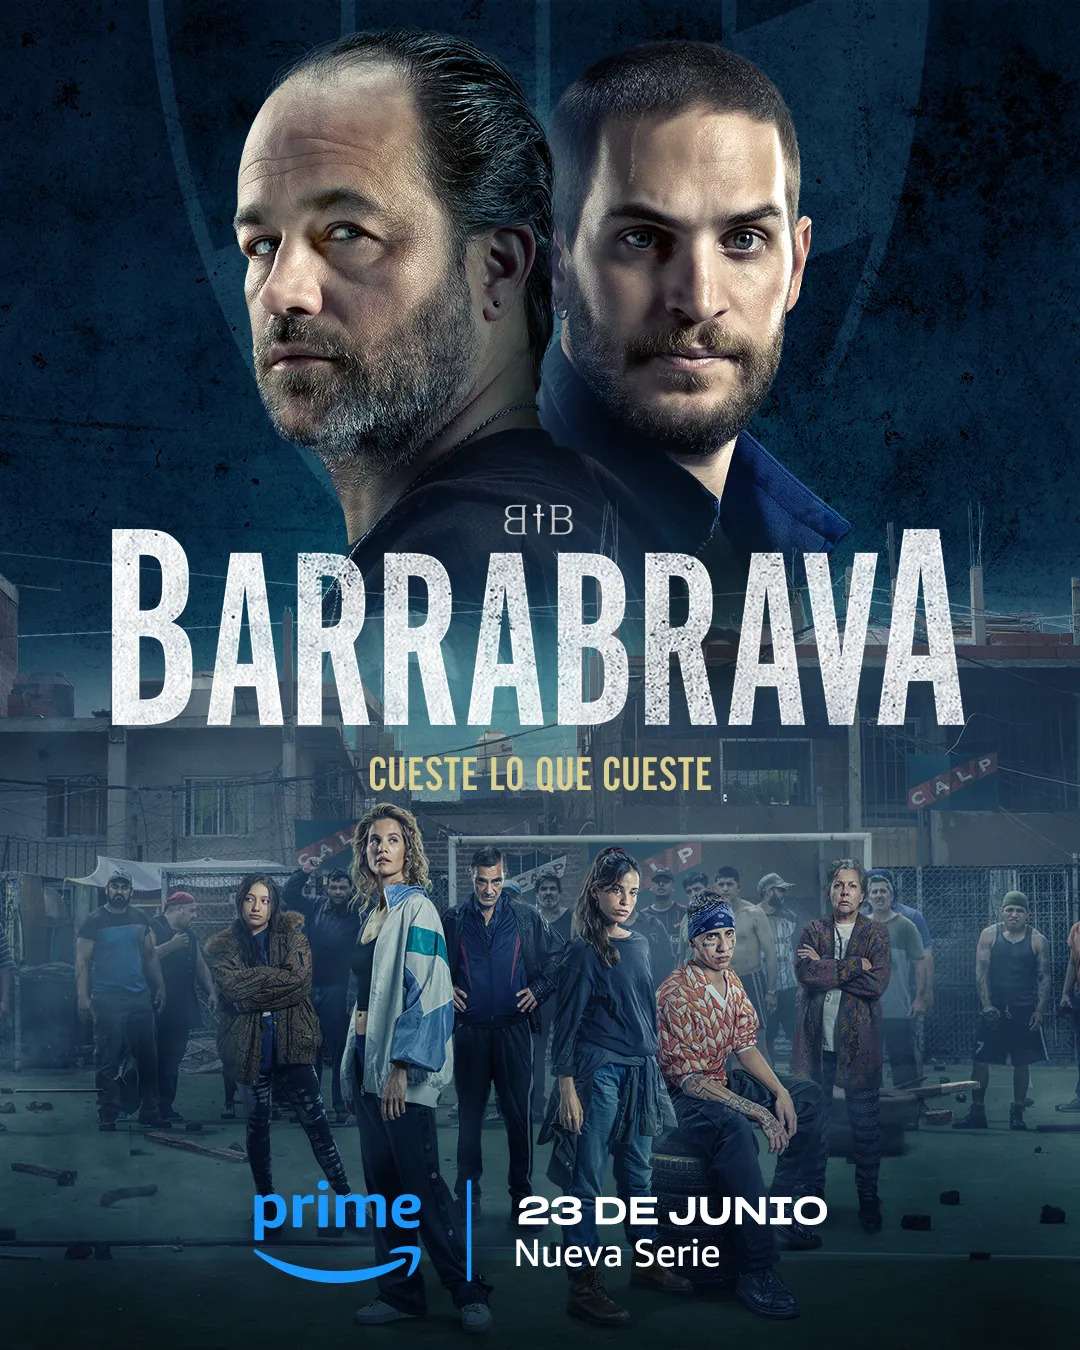 Extra Large TV Poster Image for Barrabrava 